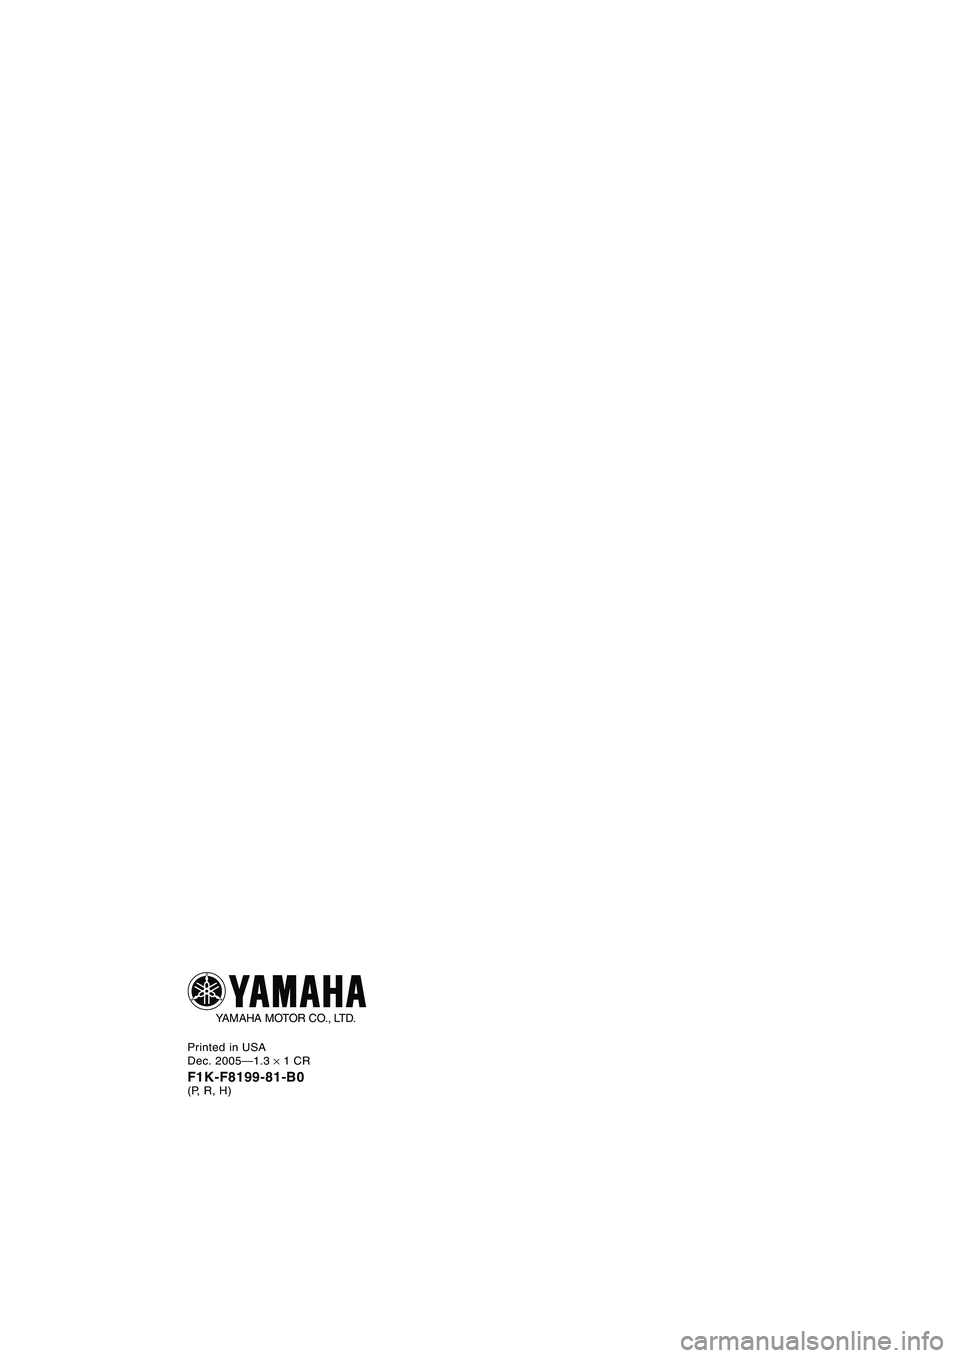 YAMAHA VX SPORT 2006  Manual de utilização (in Portuguese) Printed in USA
Dec. 2005—1.3 × 1 CR
F1K-F8199-81-B0(P, R, H)
YAMAHA MOTOR CO., LTD.
B_F1K80.book  Page 1  Monday, October 24, 2005  2:31 PM 